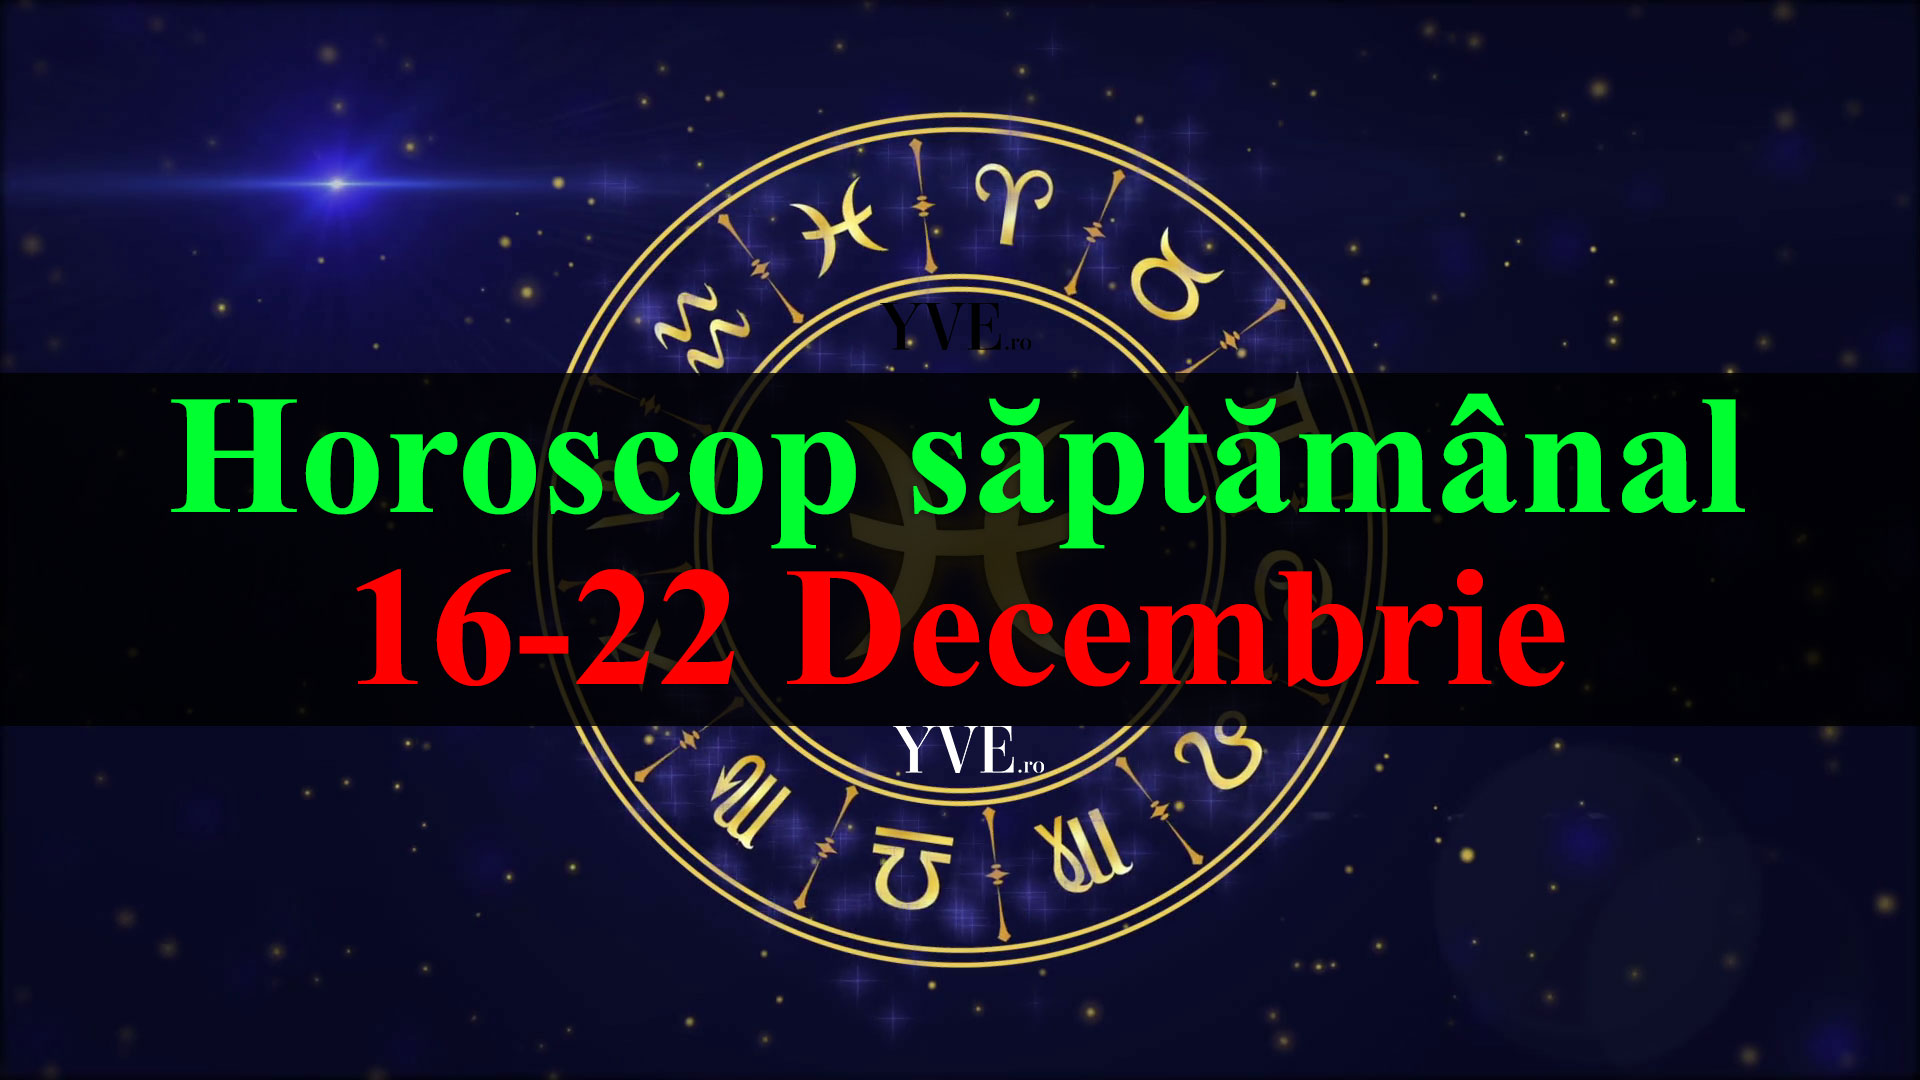 Horoscop saptamanal 16-22 Decembrie 2019